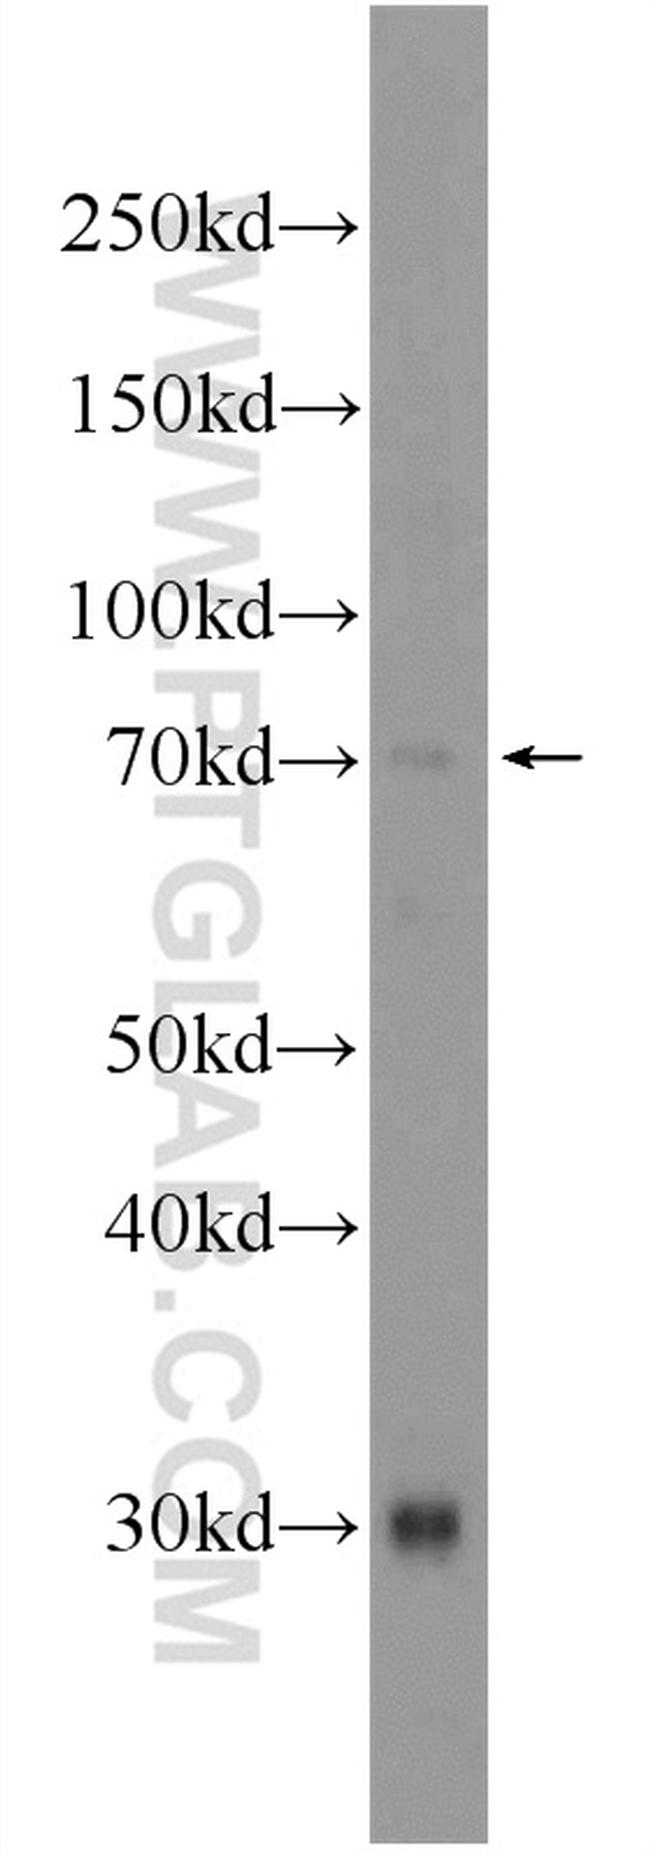 ATG16L2 Antibody in Western Blot (WB)